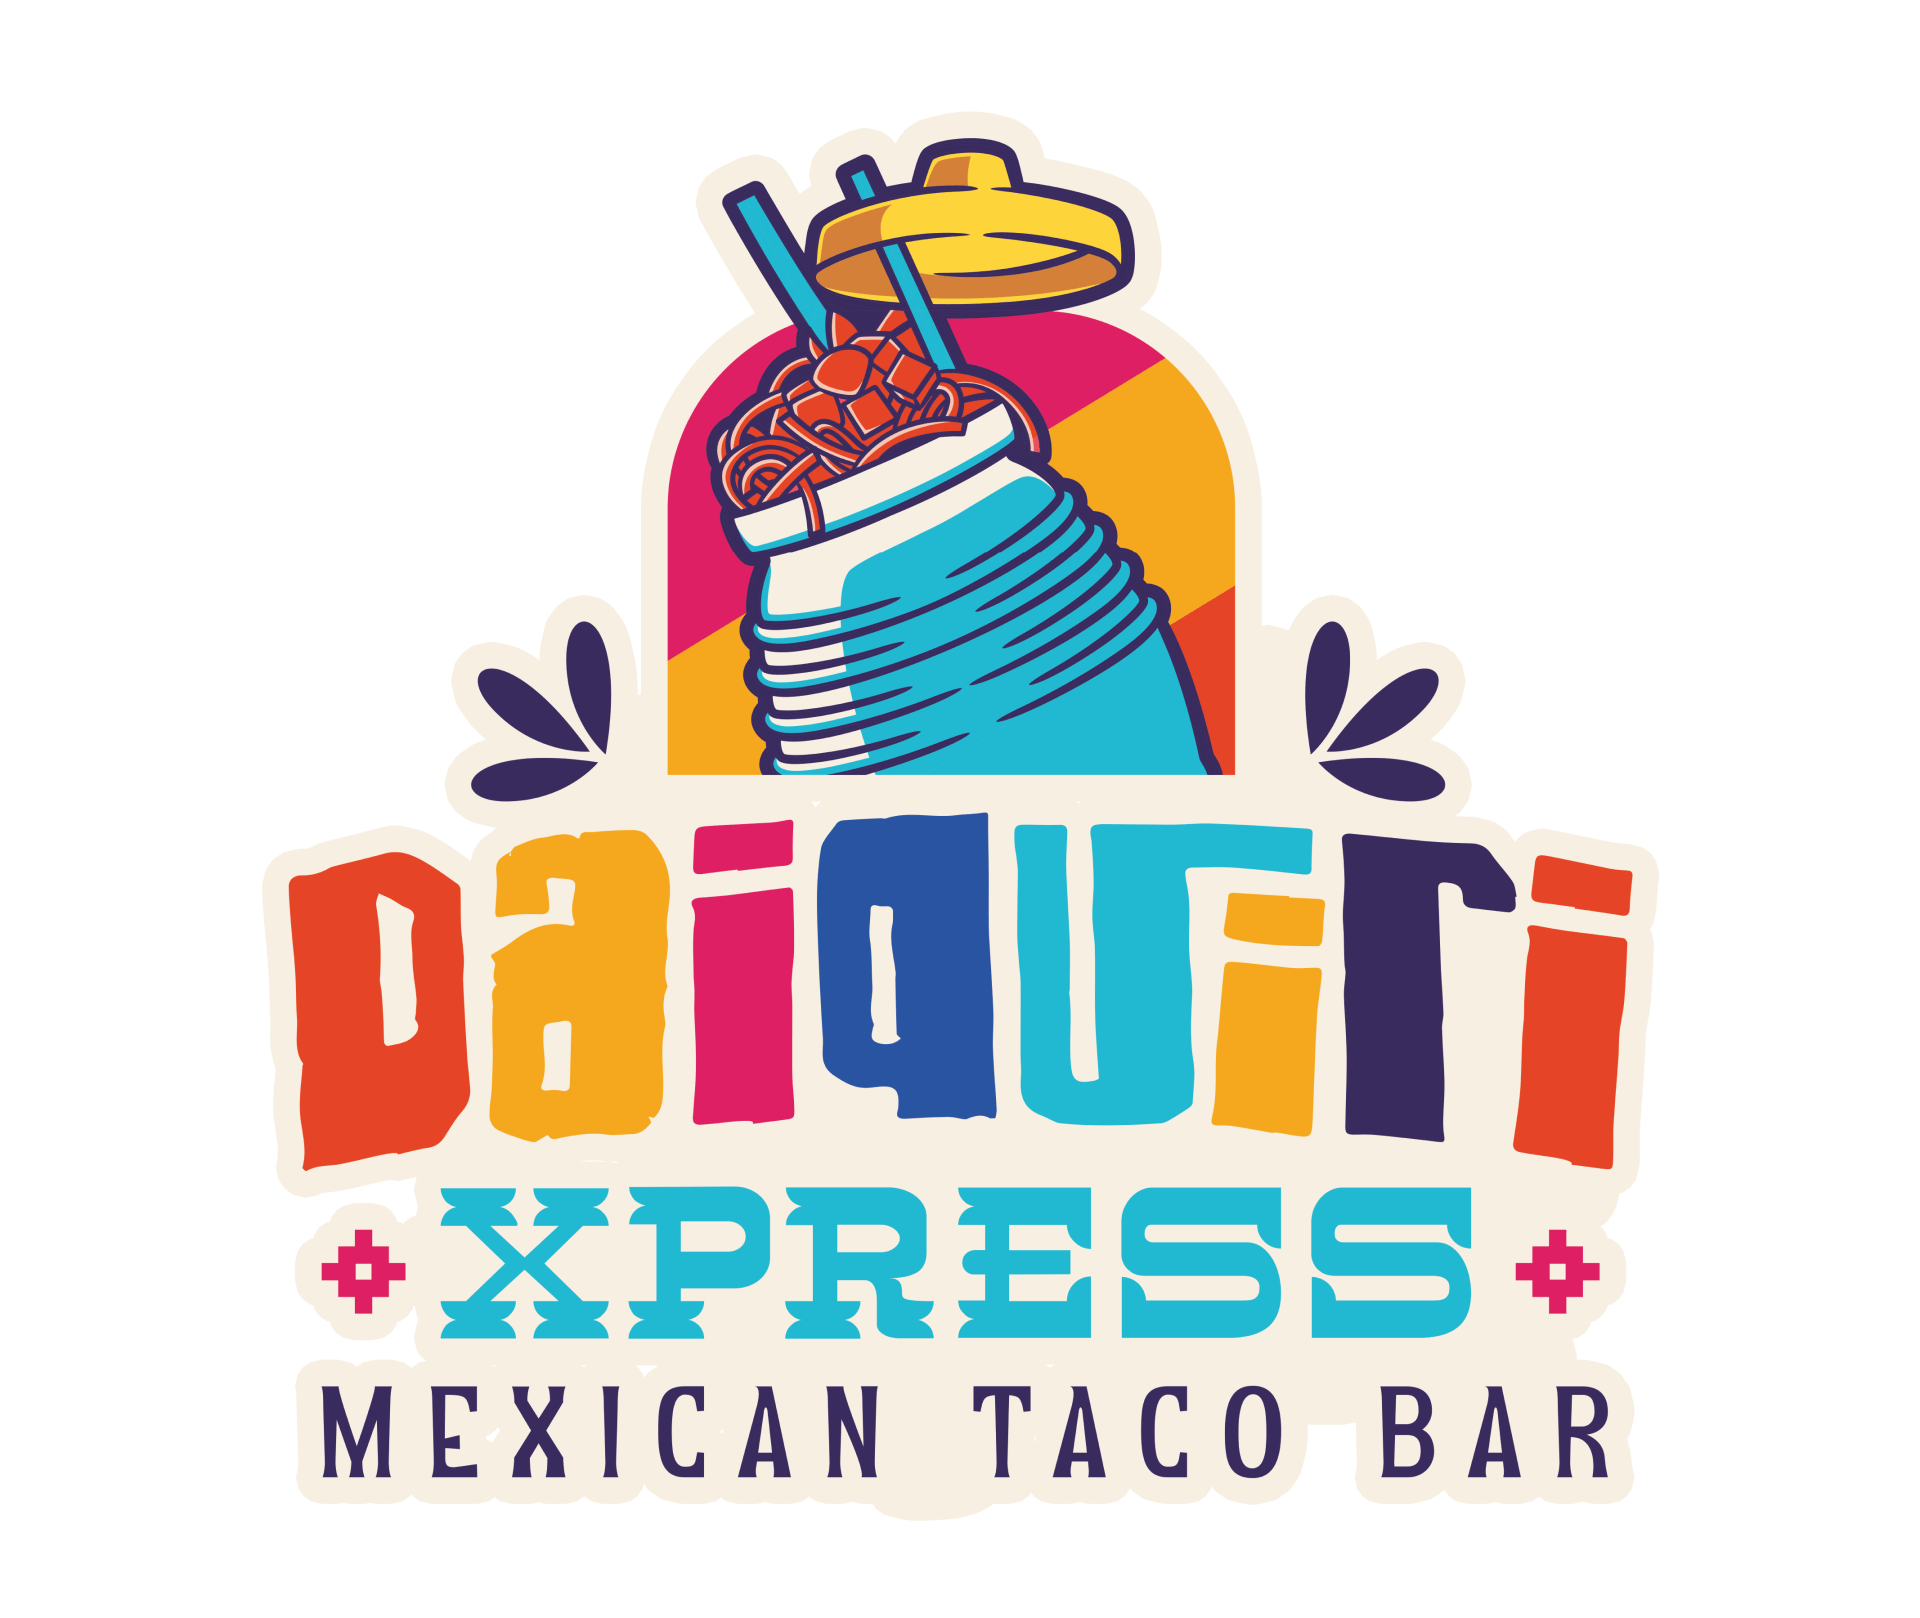 A colorful logo for a mexican taco bar.